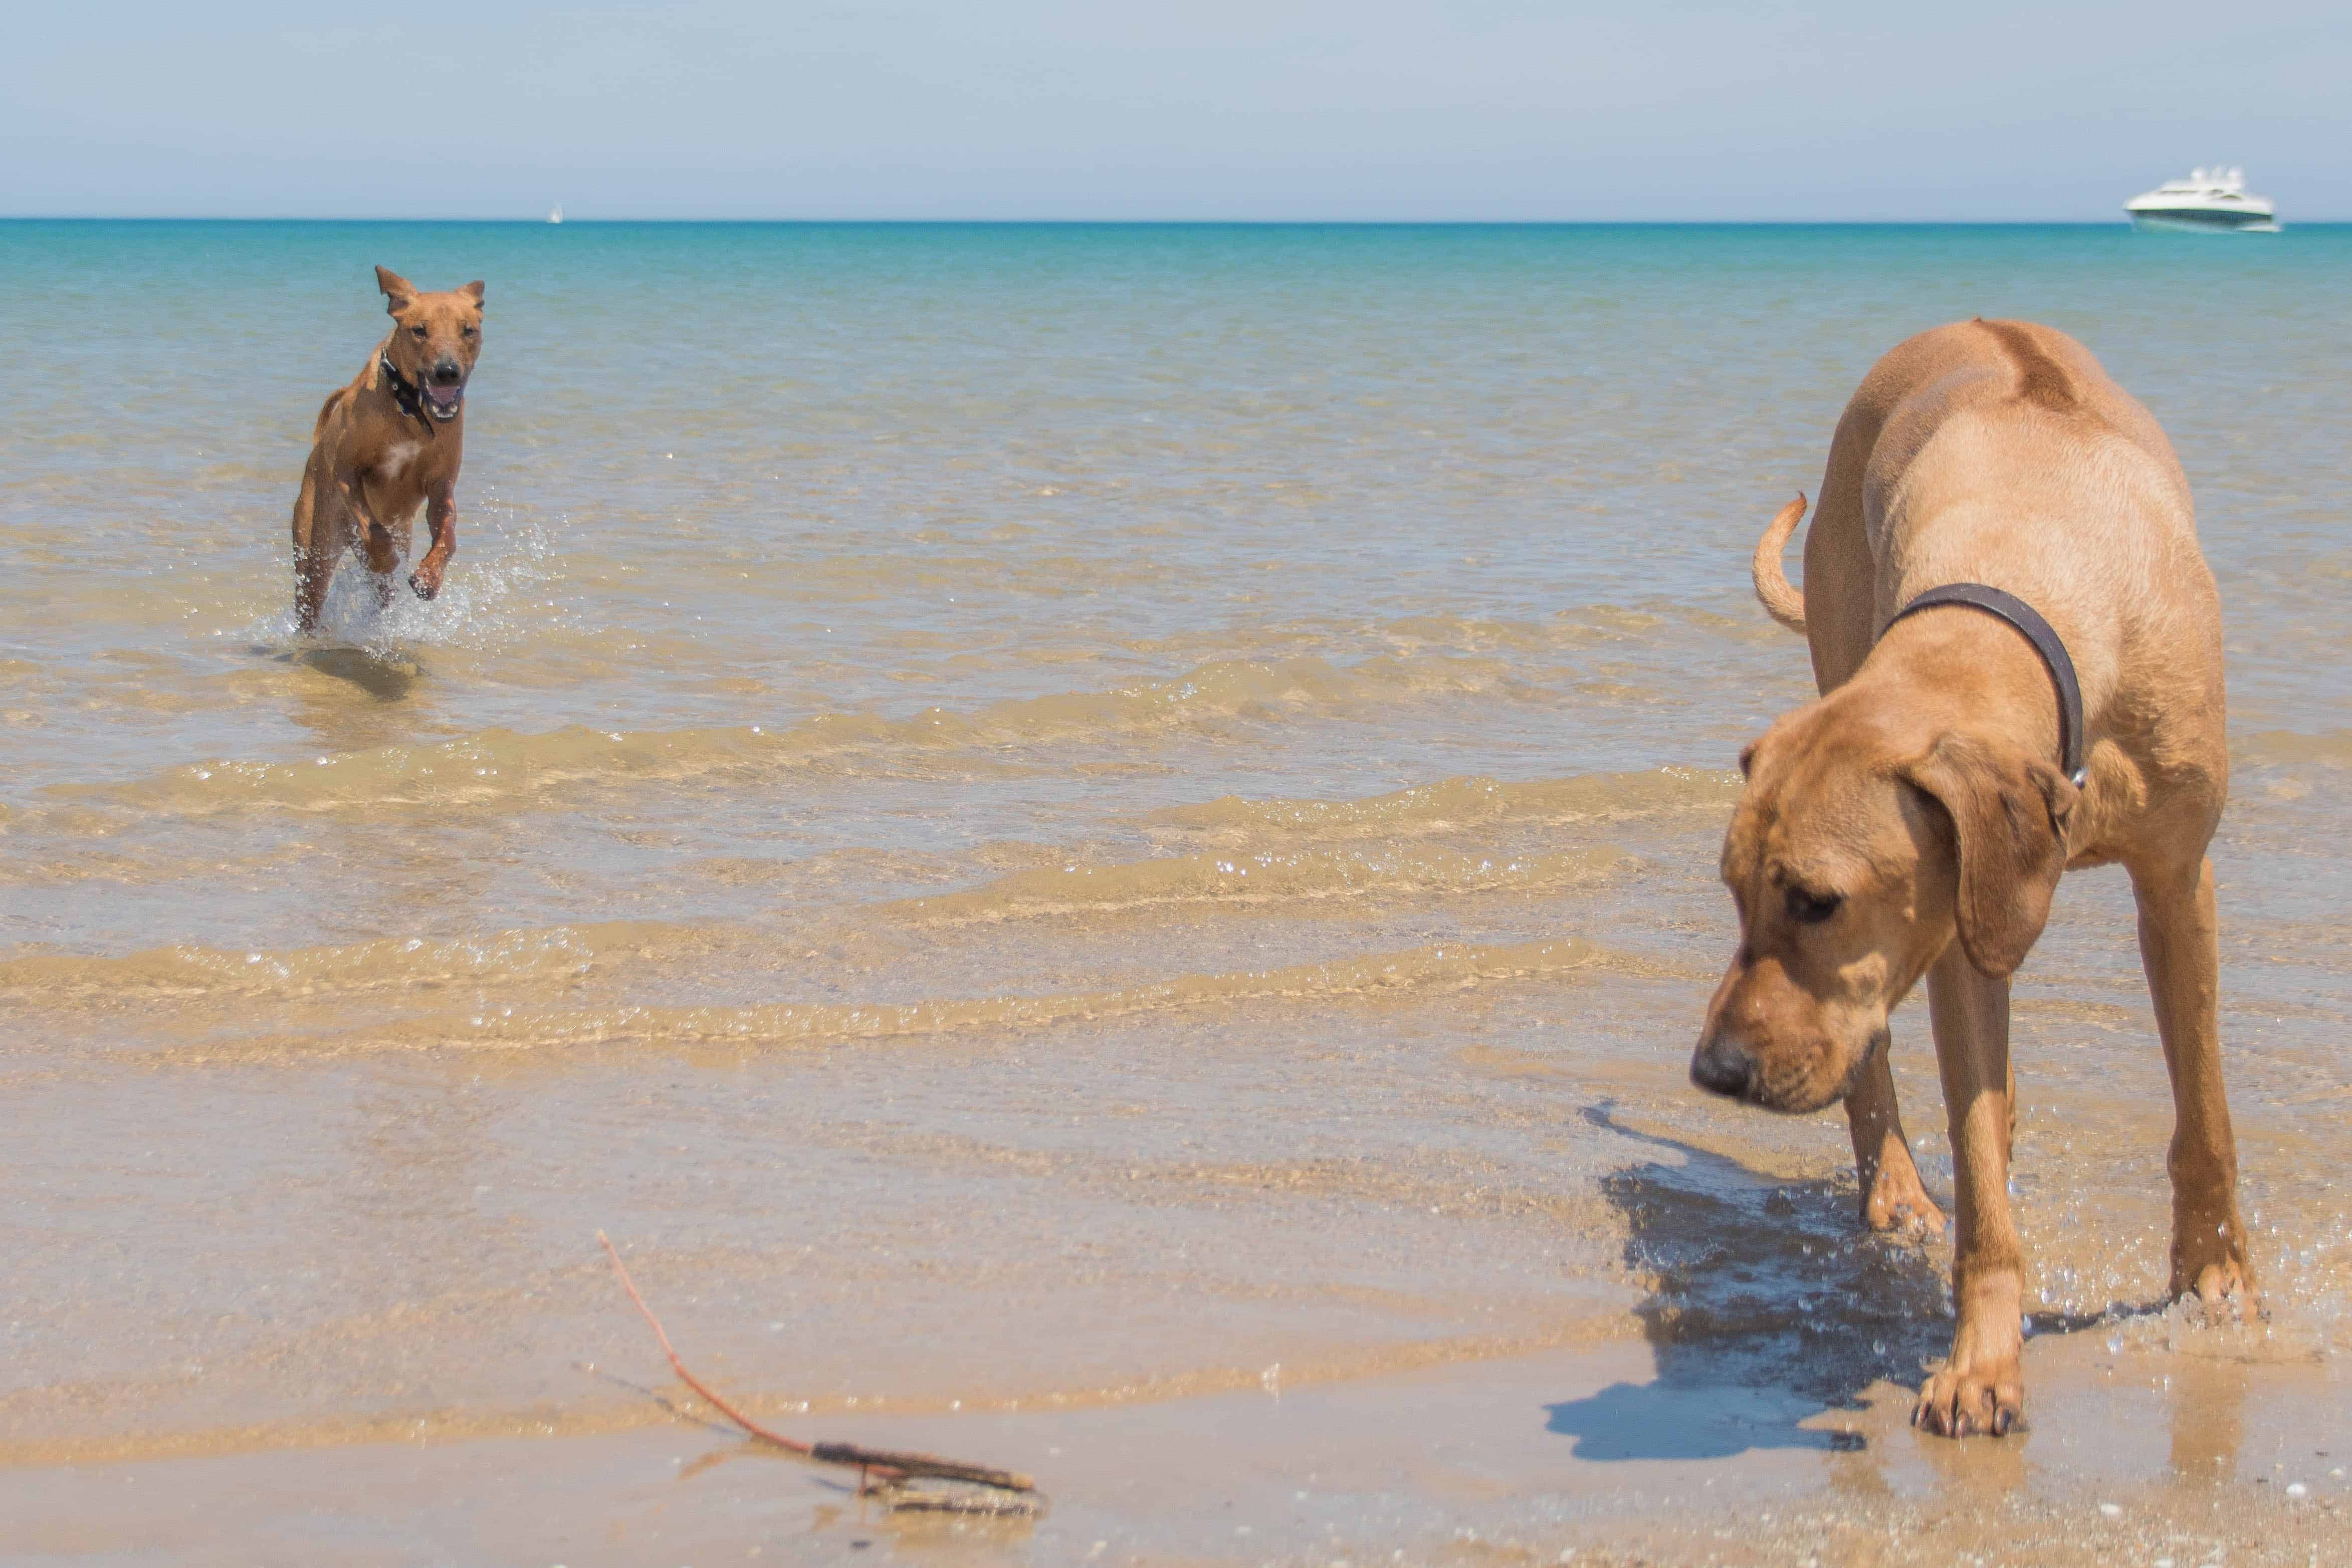 Rhodesian Ridgeback, cute, puppy, chicago, dog beach, adventure